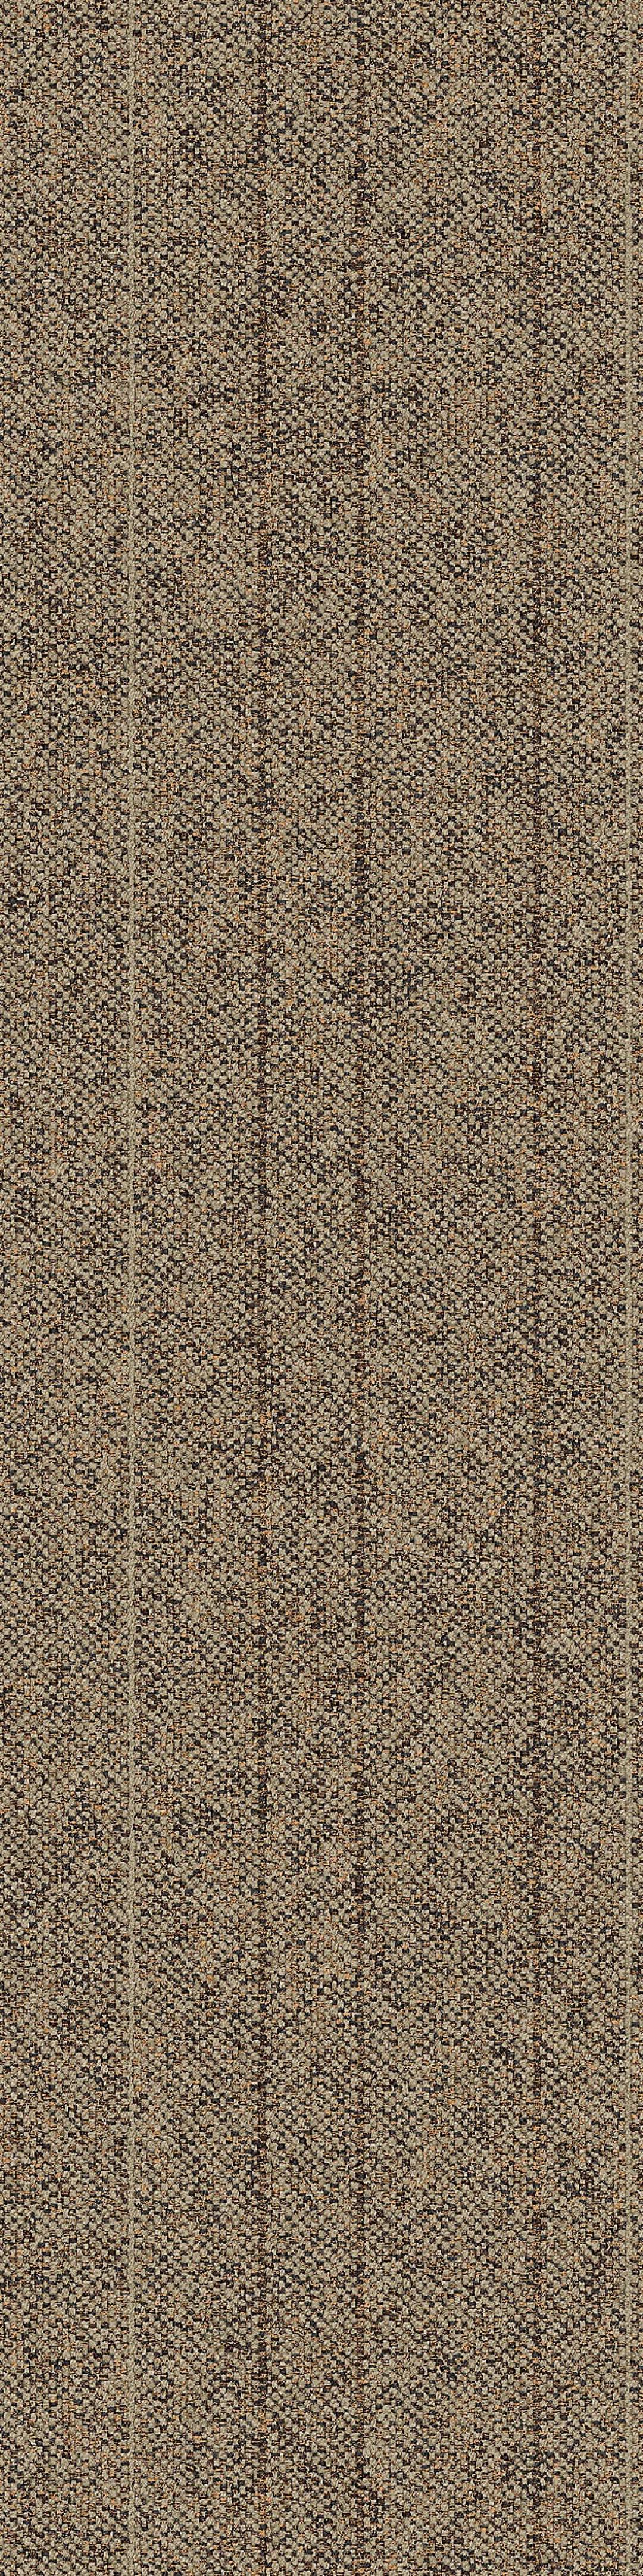 World Woven - WW860 - Sisal Tweed from Inzide